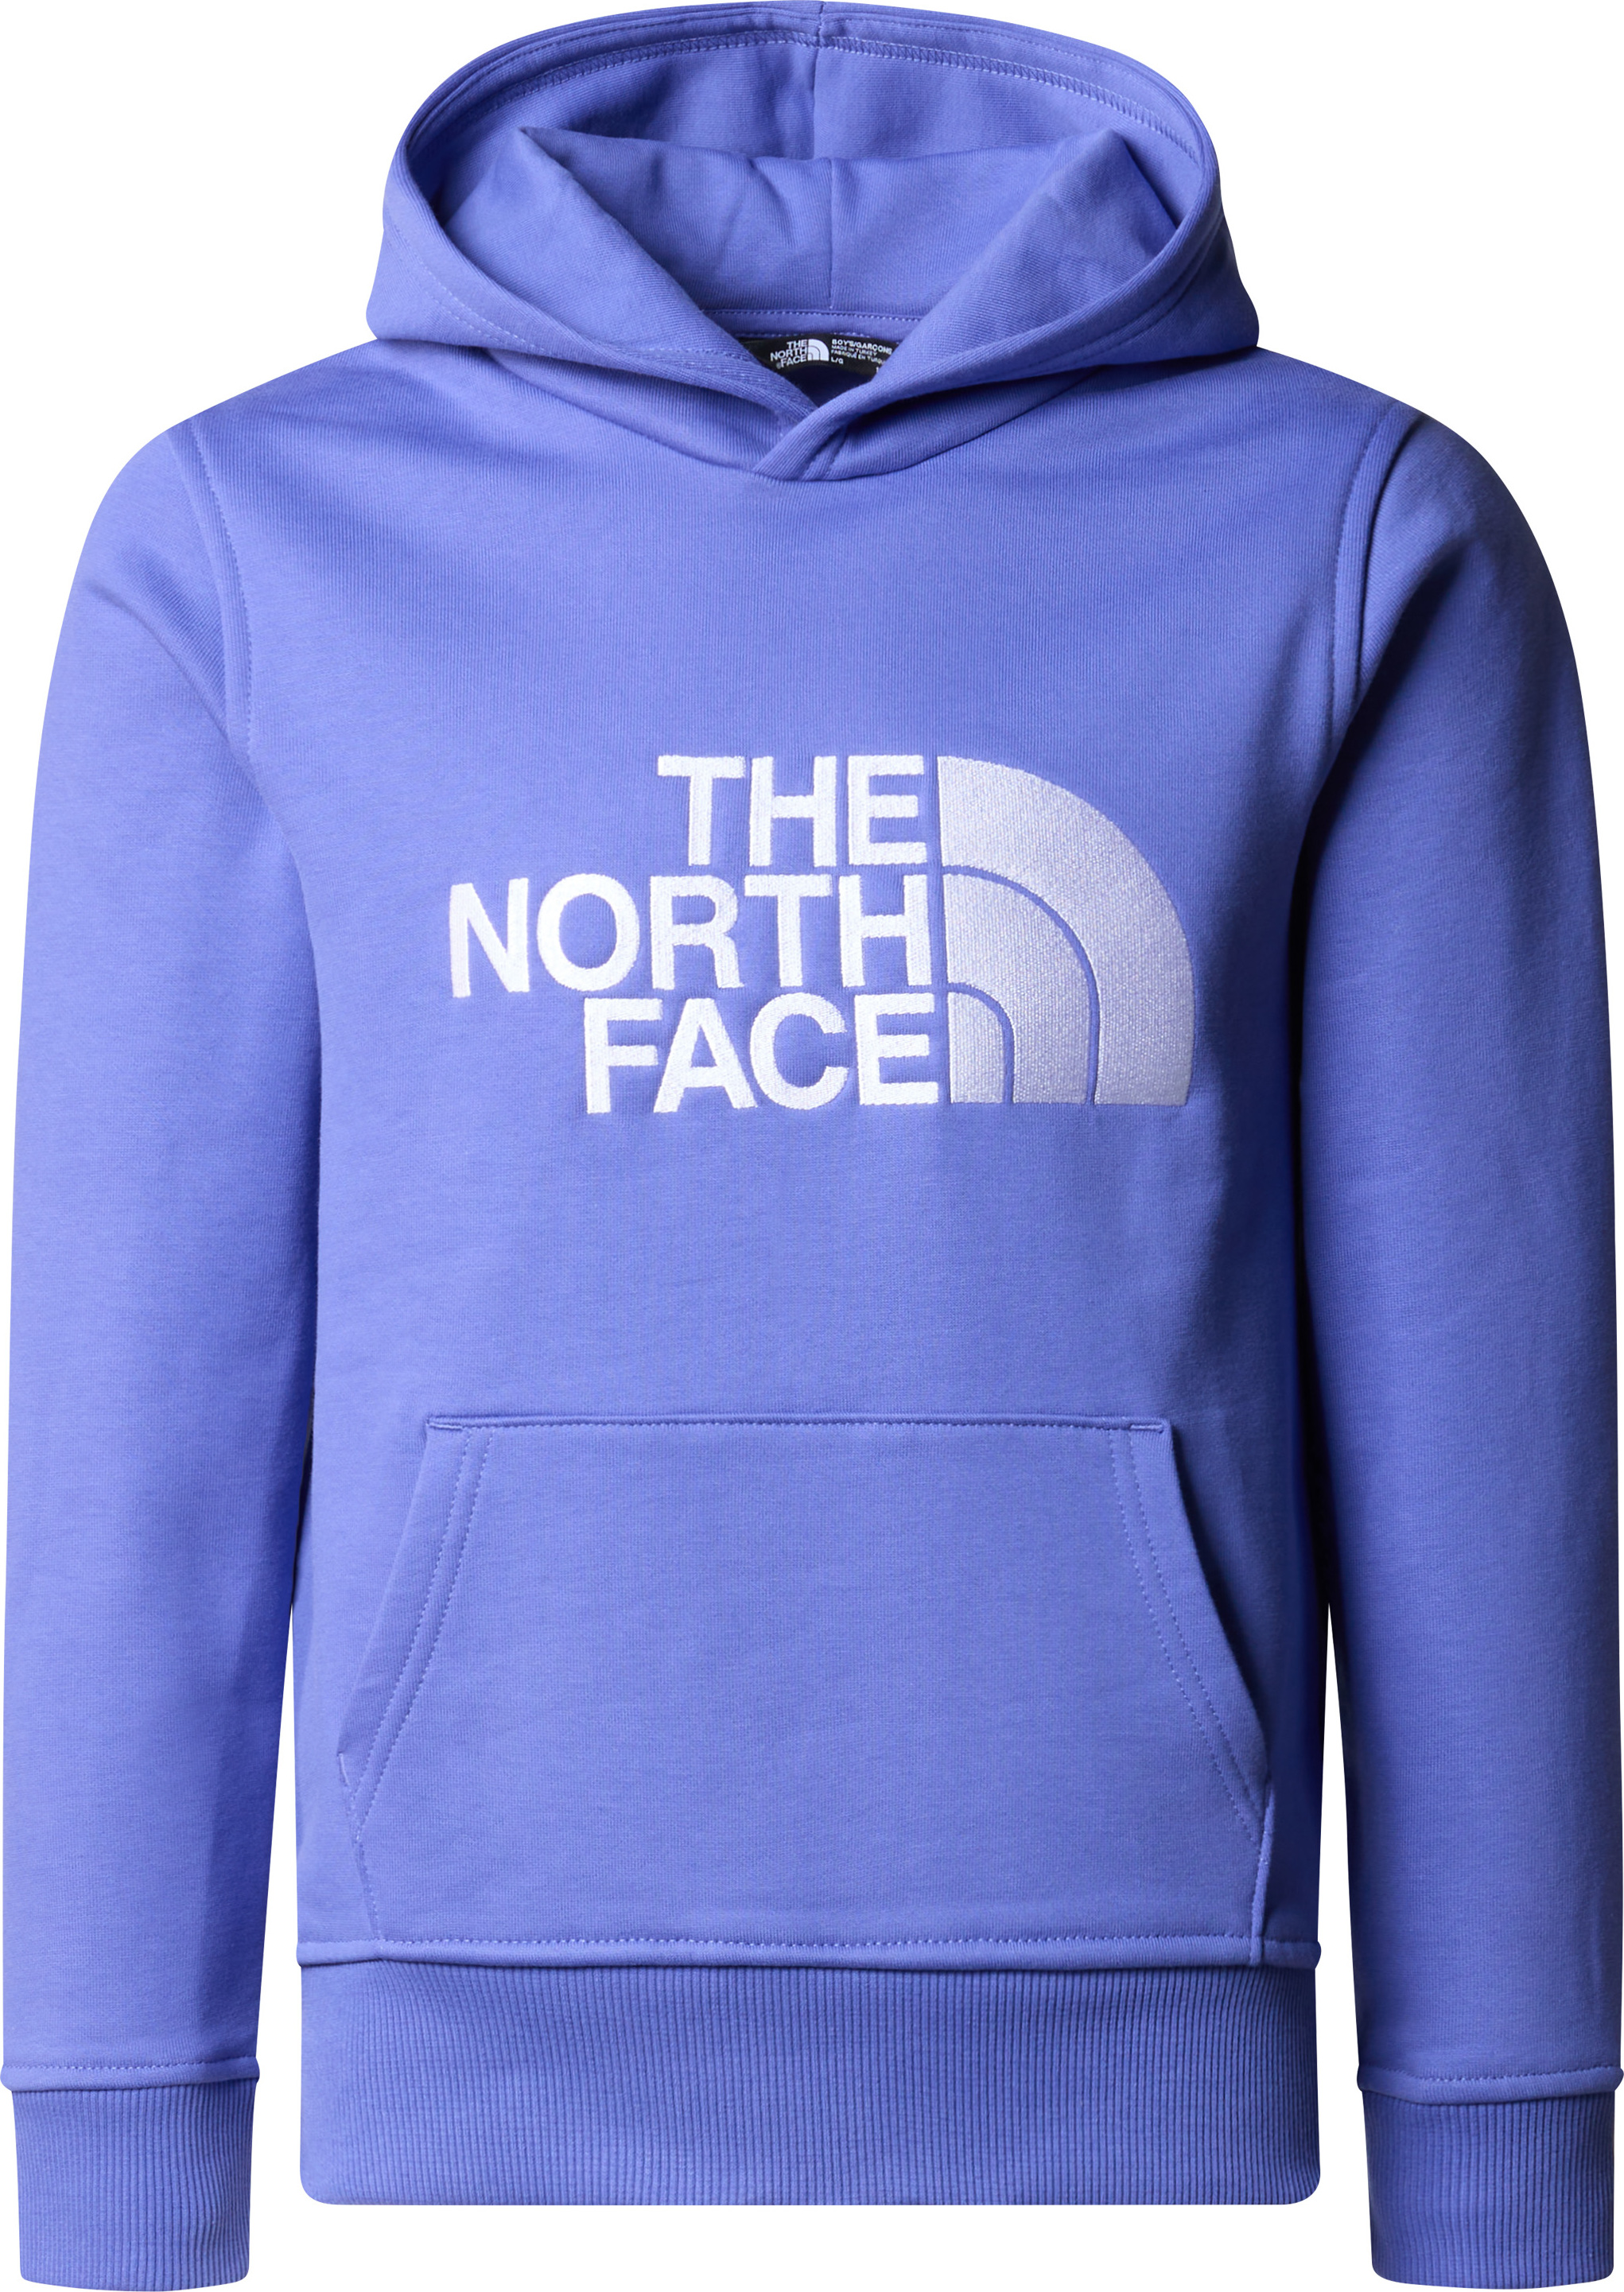 The North Face The North Face B Drew Peak P/O Hoodie Dopamine Blue L, Dopamine Blue